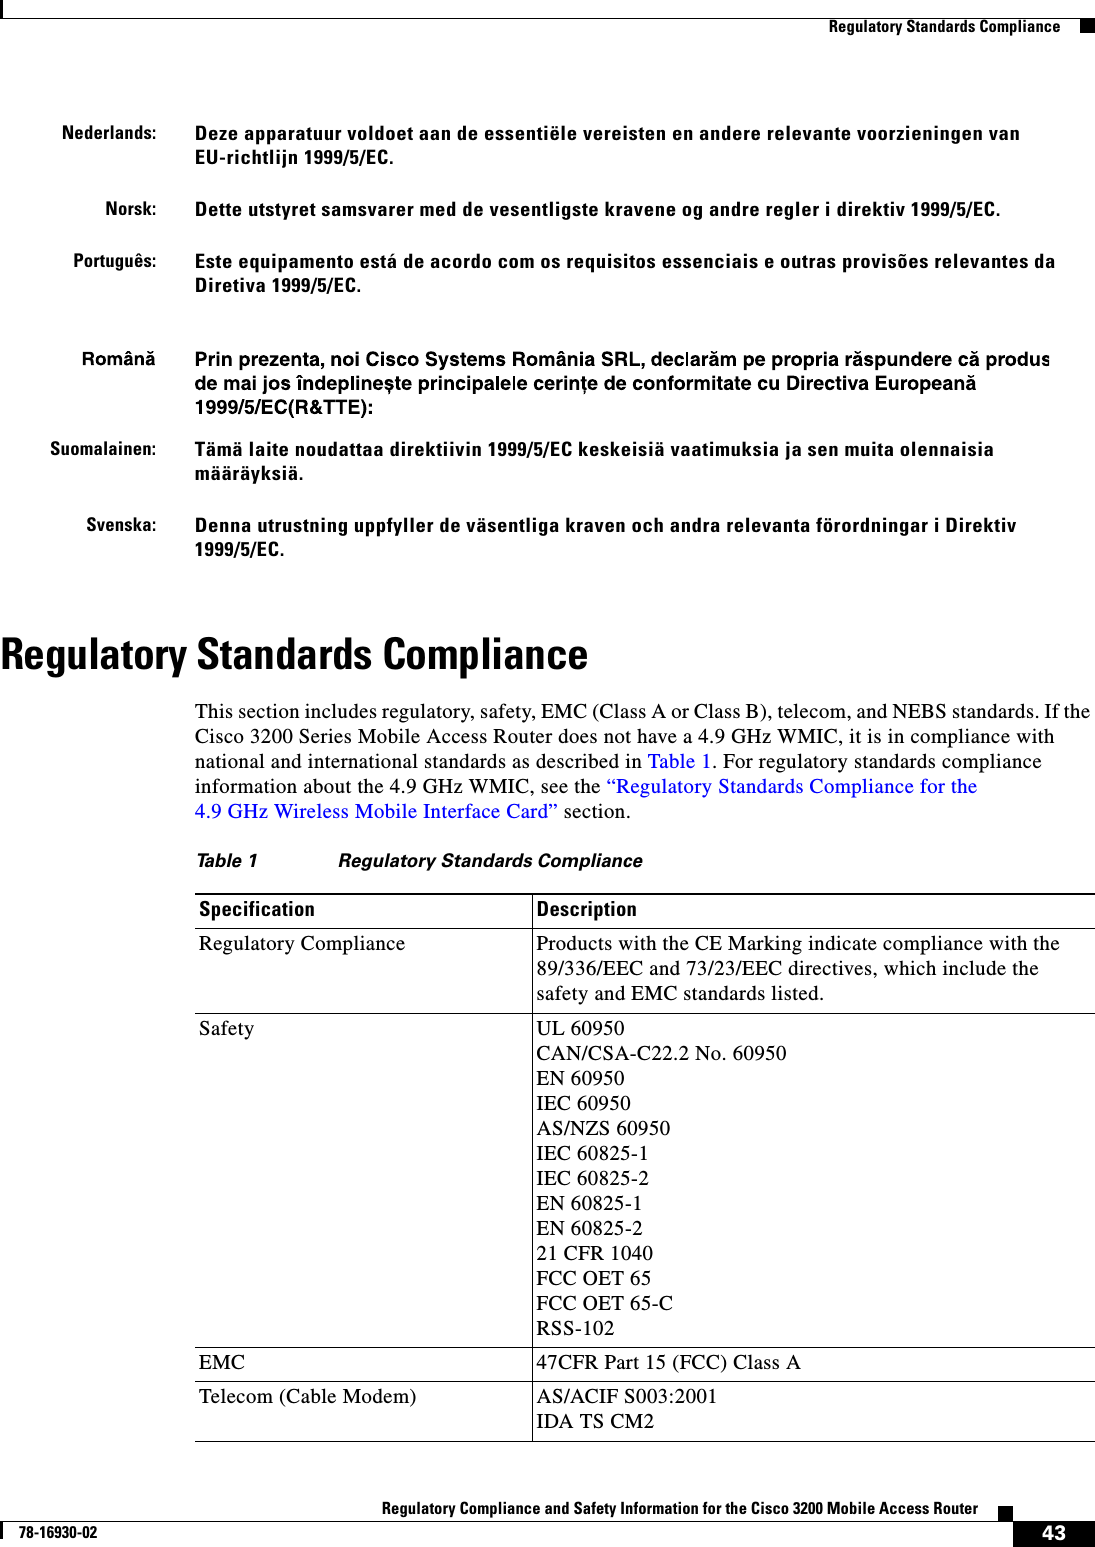 43Regulatory Compliance and Safety Information for the Cisco 3200 Mobile Access Router78-16930-02  Regulatory Standards ComplianceRegulatory Standards Compliance This section includes regulatory, safety, EMC (Class A or Class B), telecom, and NEBS standards. If the Cisco 3200 Series Mobile Access Router does not have a 4.9 GHz WMIC, it is in compliance with national and international standards as described in Table 1. For regulatory standards compliance information about the 4.9 GHz WMIC, see the “Regulatory Standards Compliance for the 4.9 GHz Wireless Mobile Interface Card” section.Nederlands:Deze apparatuur voldoet aan de essentiële vereisten en andere relevante voorzieningen van EU-richtlijn 1999/5/EC.Norsk:Dette utstyret samsvarer med de vesentligste kravene og andre regler i direktiv 1999/5/EC.Português:Este equipamento está de acordo com os requisitos essenciais e outras provisões relevantes da Diretiva 1999/5/EC.Suomalainen:Tämä laite noudattaa direktiivin 1999/5/EC keskeisiä vaatimuksia ja sen muita olennaisia määräyksiä.Svenska:Denna utrustning uppfyller de väsentliga kraven och andra relevanta förordningar i Direktiv 1999/5/EC.Table 1 Regulatory Standards ComplianceSpecification DescriptionRegulatory Compliance Products with the CE Marking indicate compliance with the 89/336/EEC and 73/23/EEC directives, which include the safety and EMC standards listed.Safety UL 60950CAN/CSA-C22.2 No. 60950EN 60950IEC 60950AS/NZS 60950IEC 60825-1IEC 60825-2EN 60825-1EN 60825-221 CFR 1040FCC OET 65 FCC OET 65-CRSS-102EMC 47CFR Part 15 (FCC) Class ATelecom (Cable Modem) AS/ACIF S003:2001IDA TS CM2